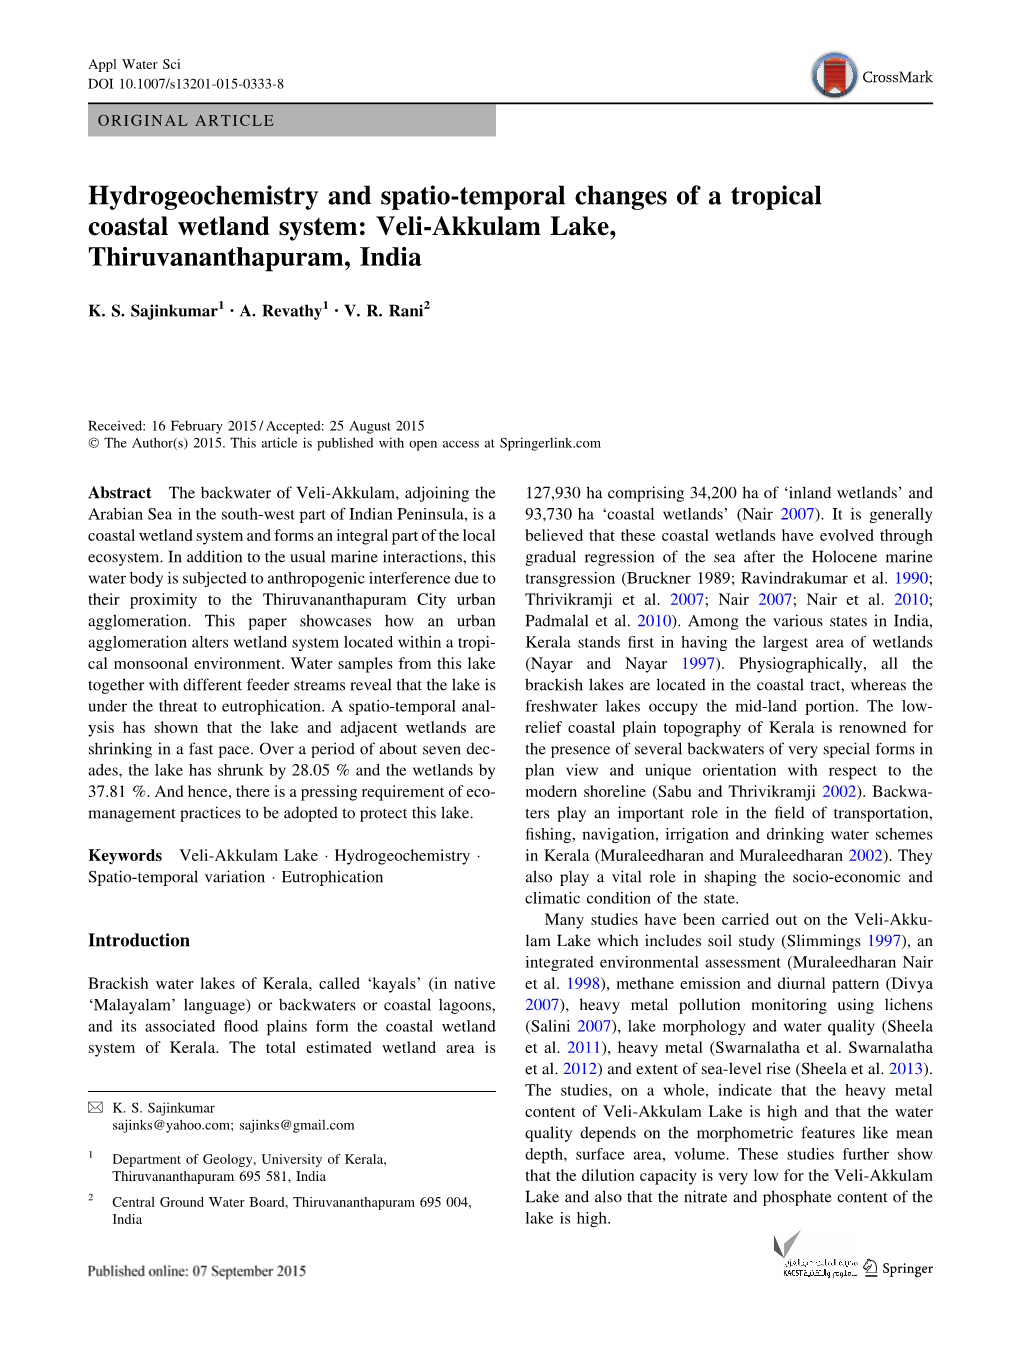 Hydrogeochemistry and Spatio-Temporal Changes of a Tropical Coastal Wetland System: Veli-Akkulam Lake, Thiruvananthapuram, India